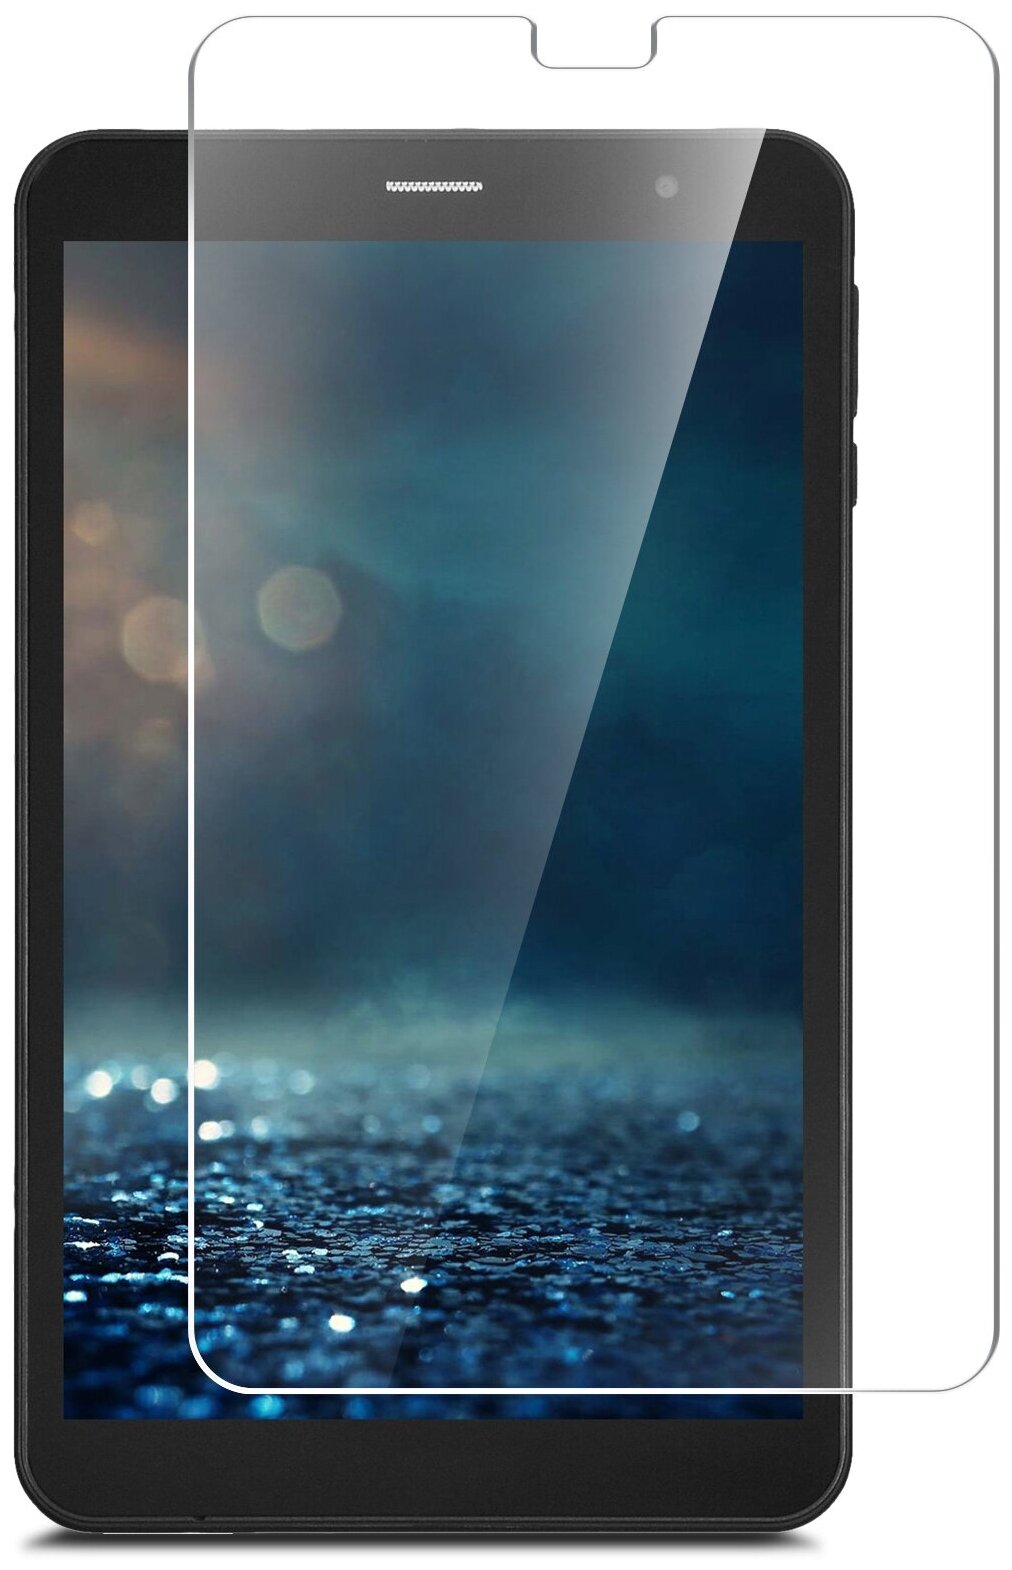 Защитное стекло на Digma CITI 8 E400 8" на Экран (гибридное=пленка+стекловолокно) прозрачное тонкое Hybrid Glass Miuko